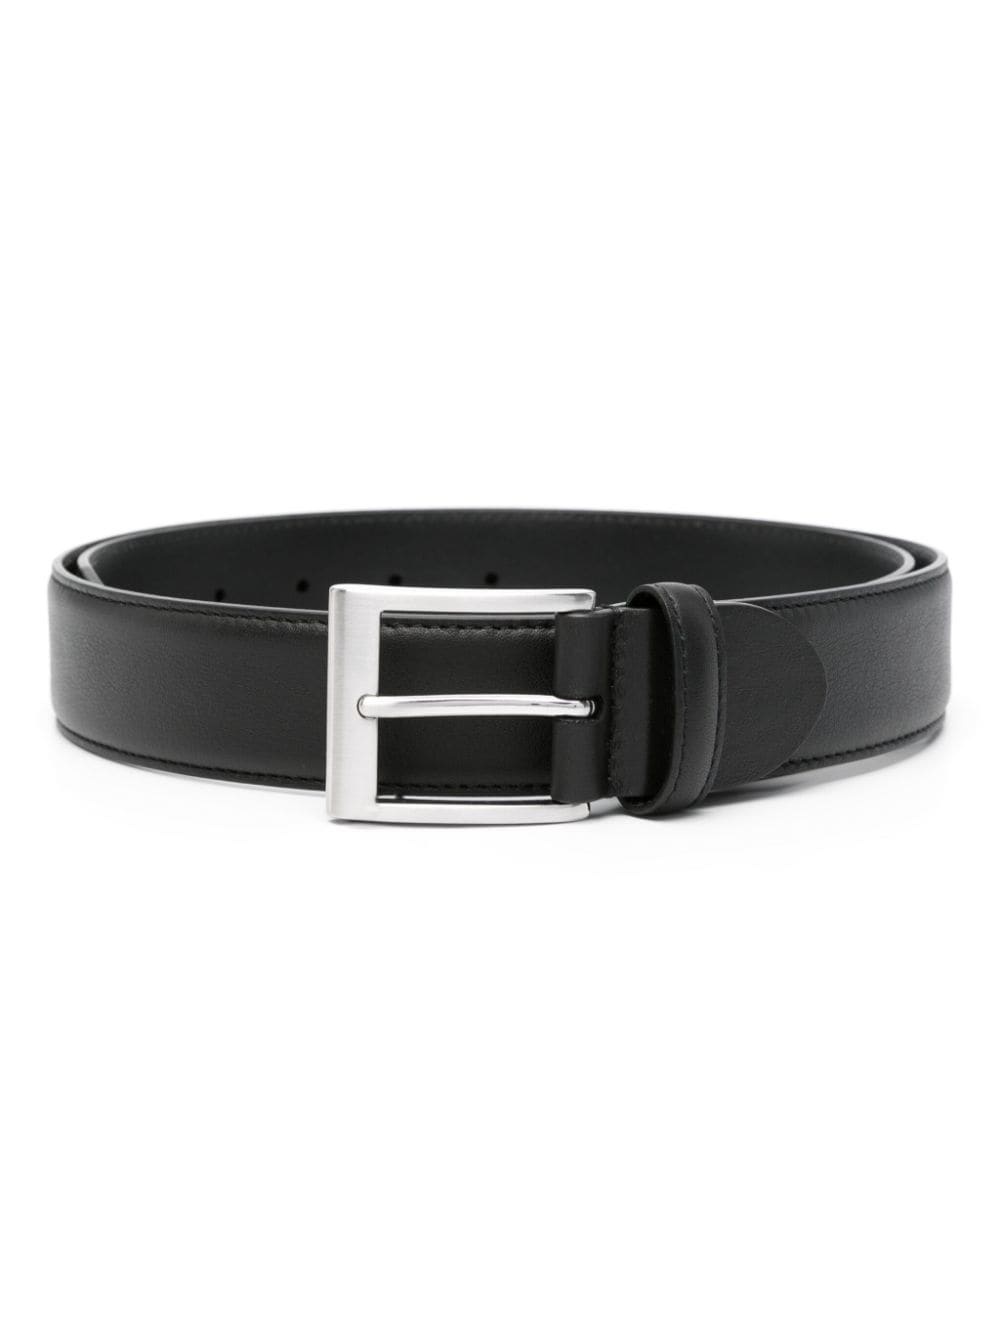 leather buckle belt - 1